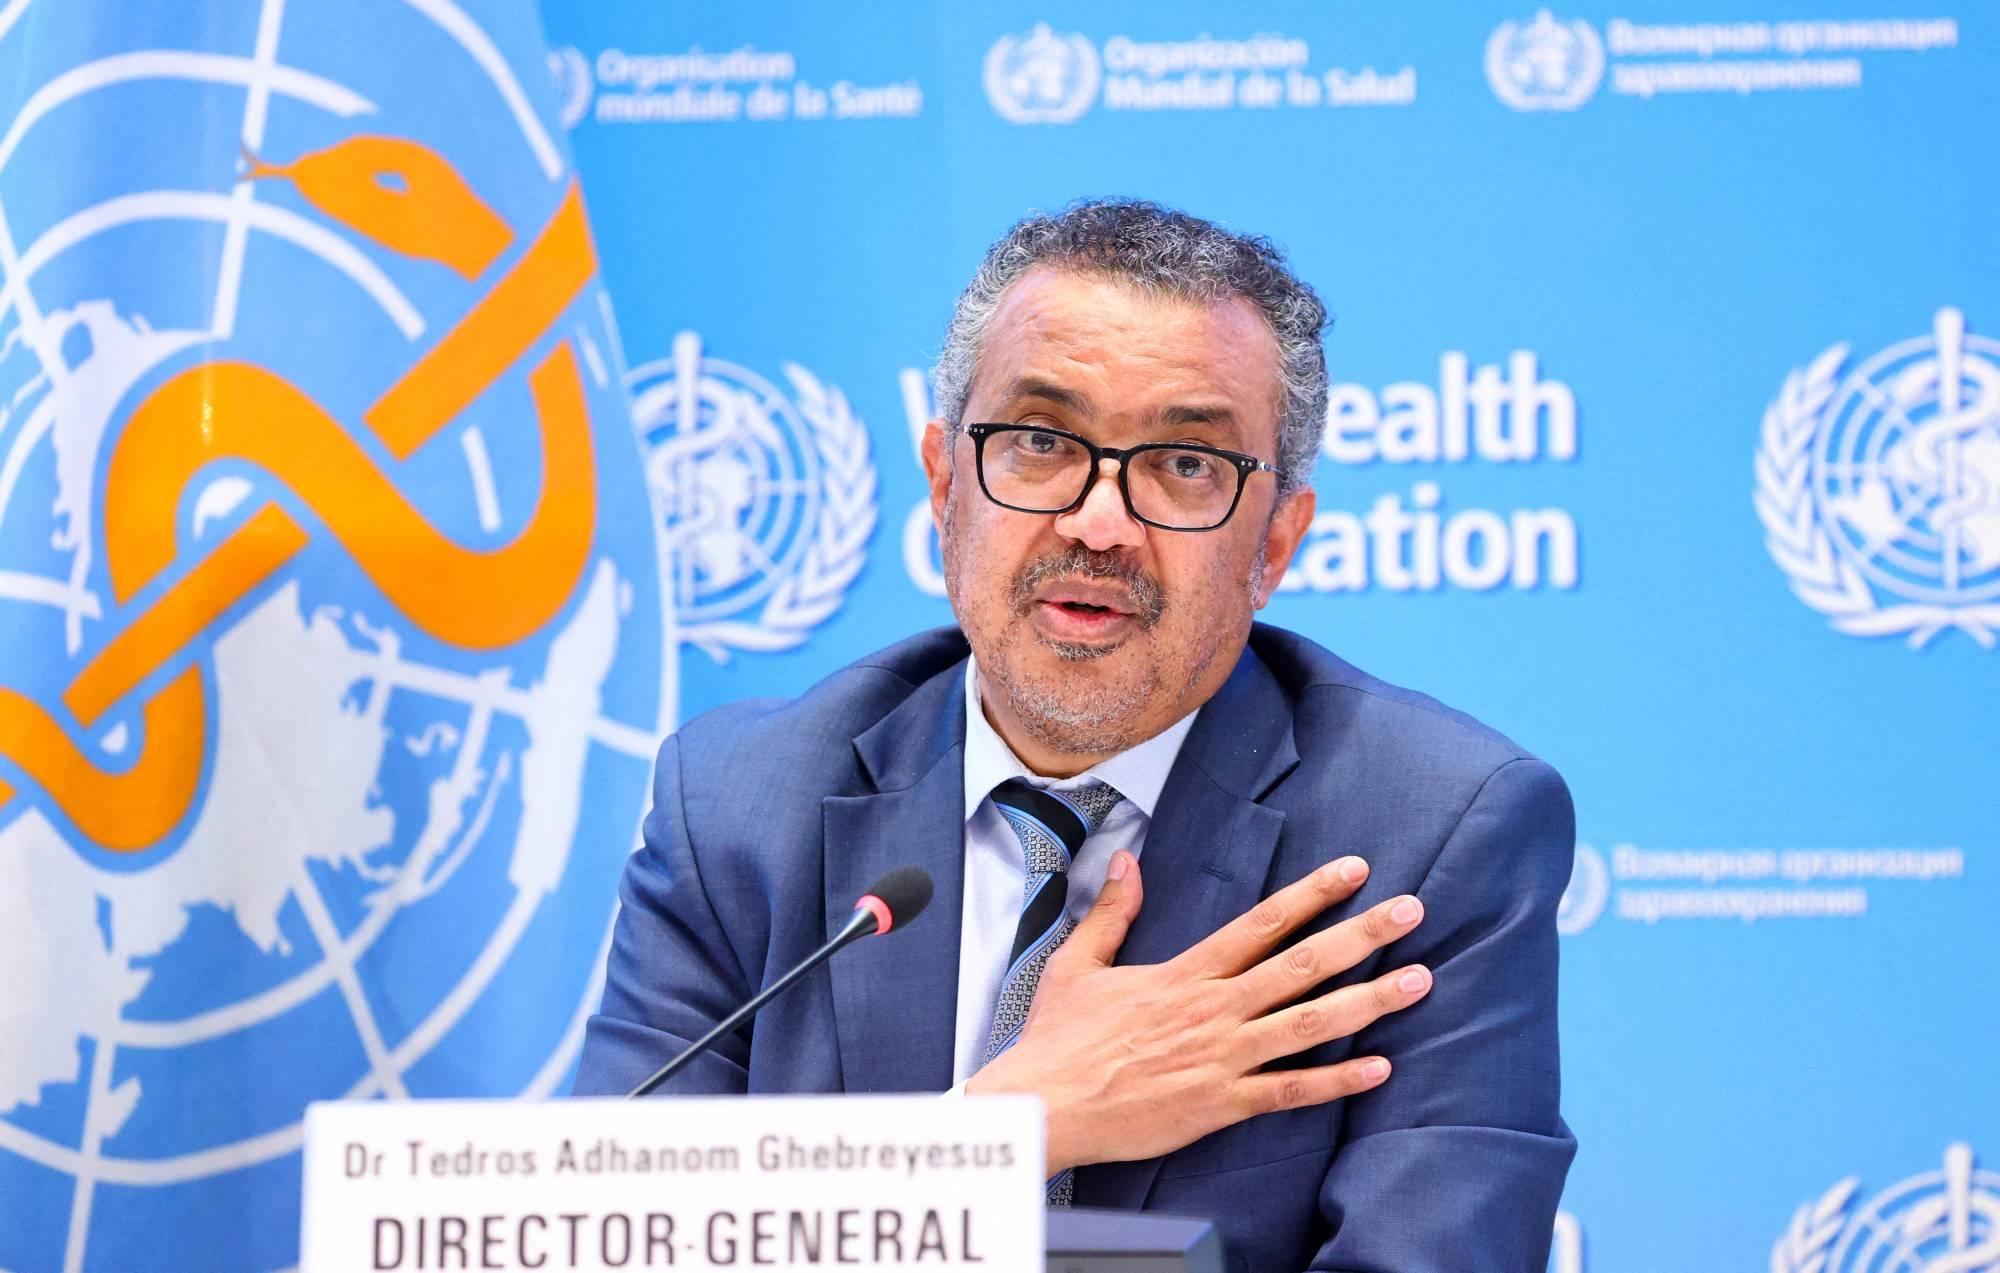 Tedros Adhanom Ghebreyesus ponovo izabran za direktora WHO-a - Avaz